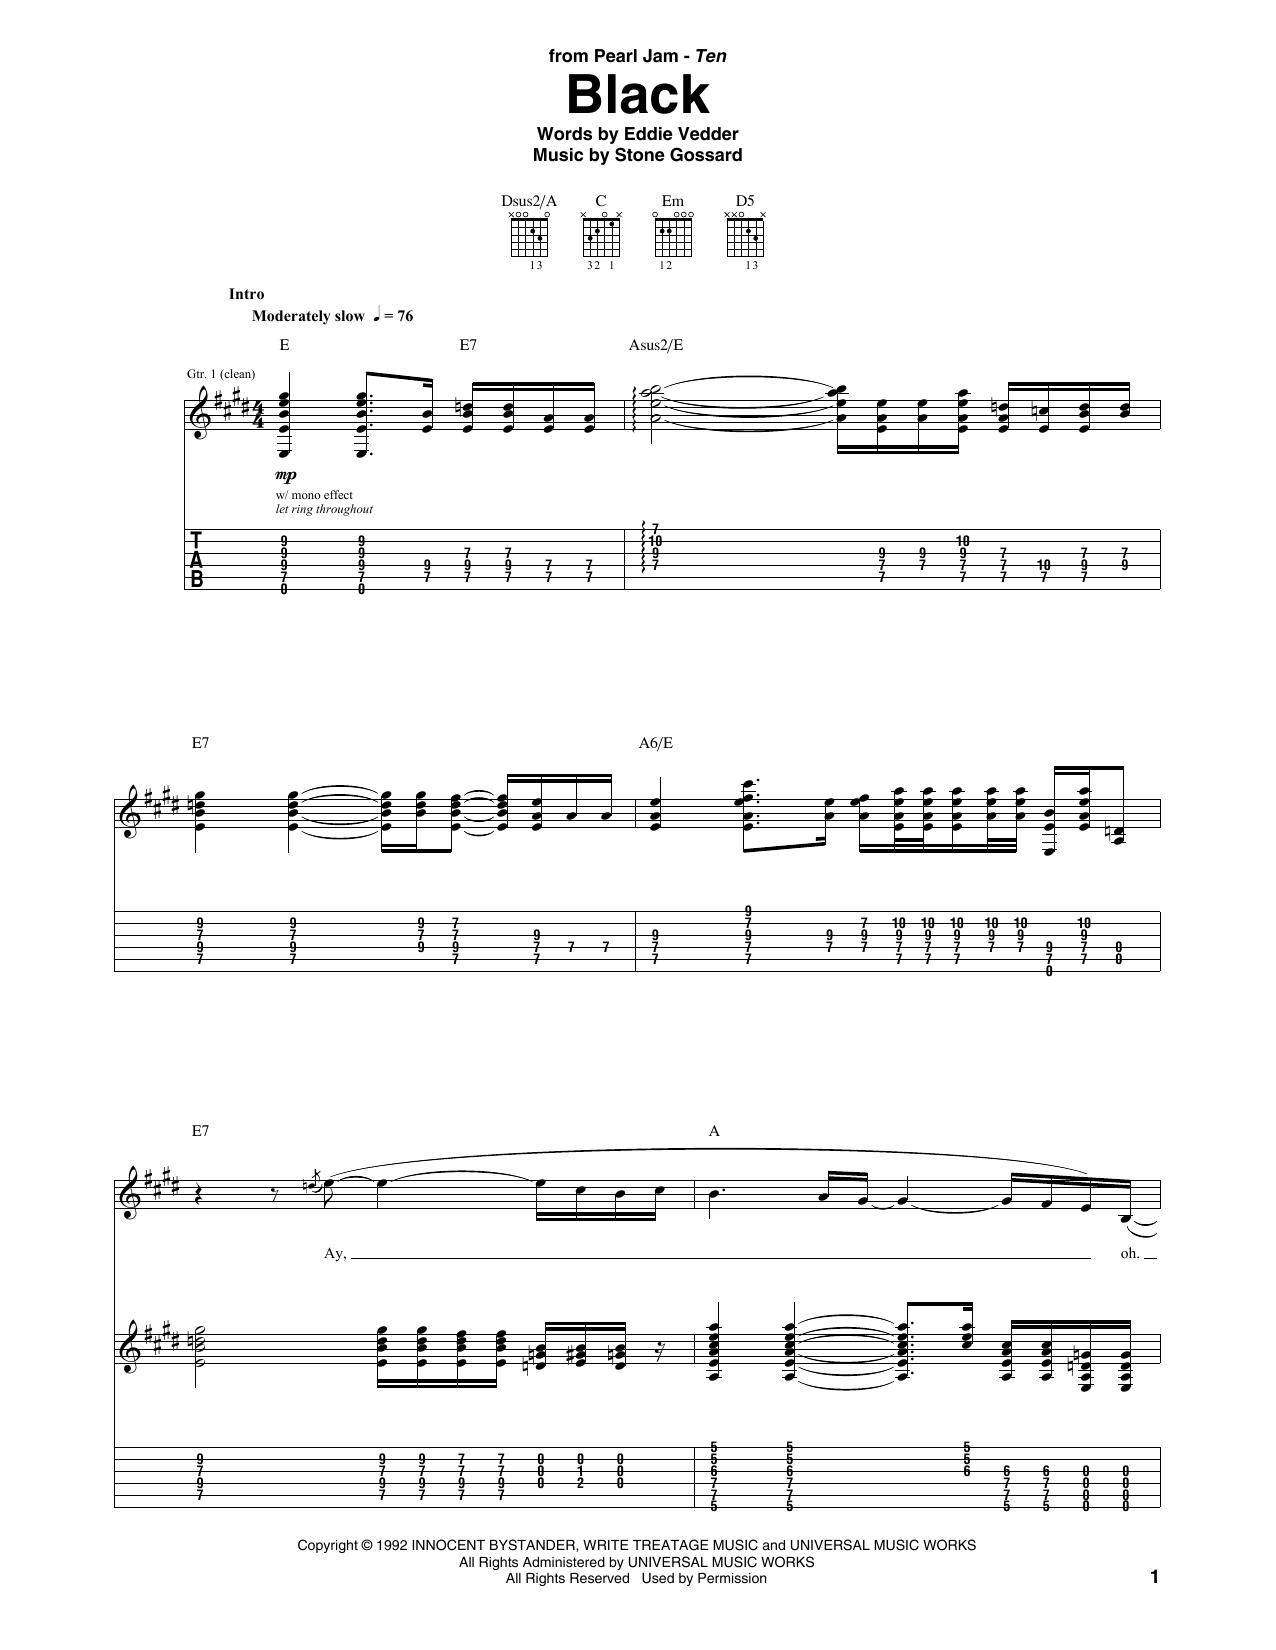 Pearl Jam Black Sheet Music Notes & Chords for Guitar Tab - Download or Print PDF